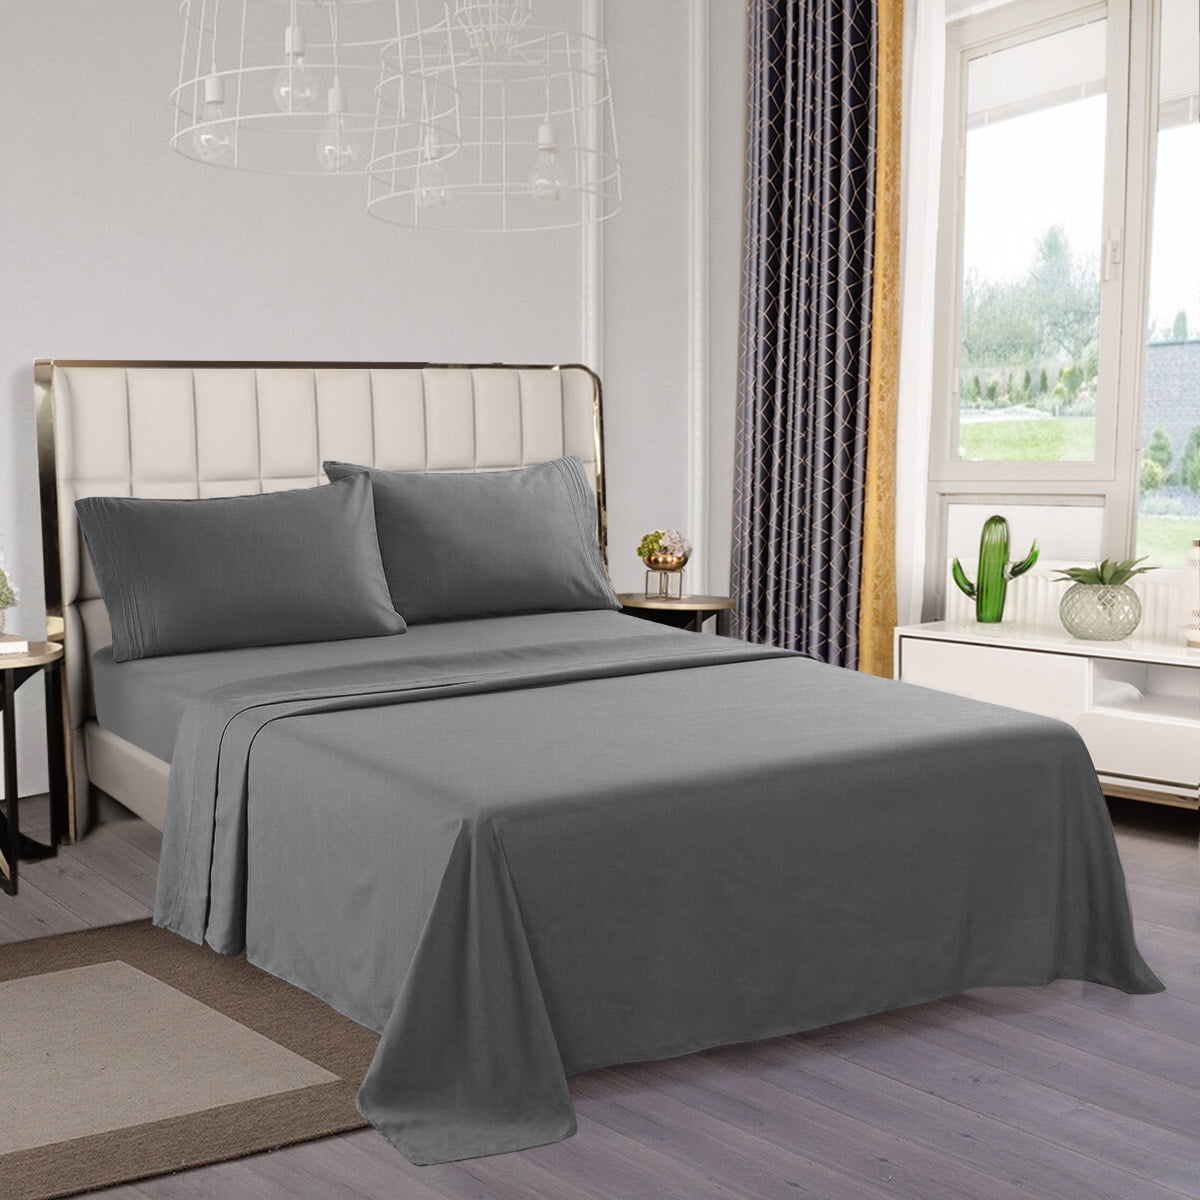 Bed Sheets King Size Wonwo Luxury, Dark Grey Bed Sheets Super King Size